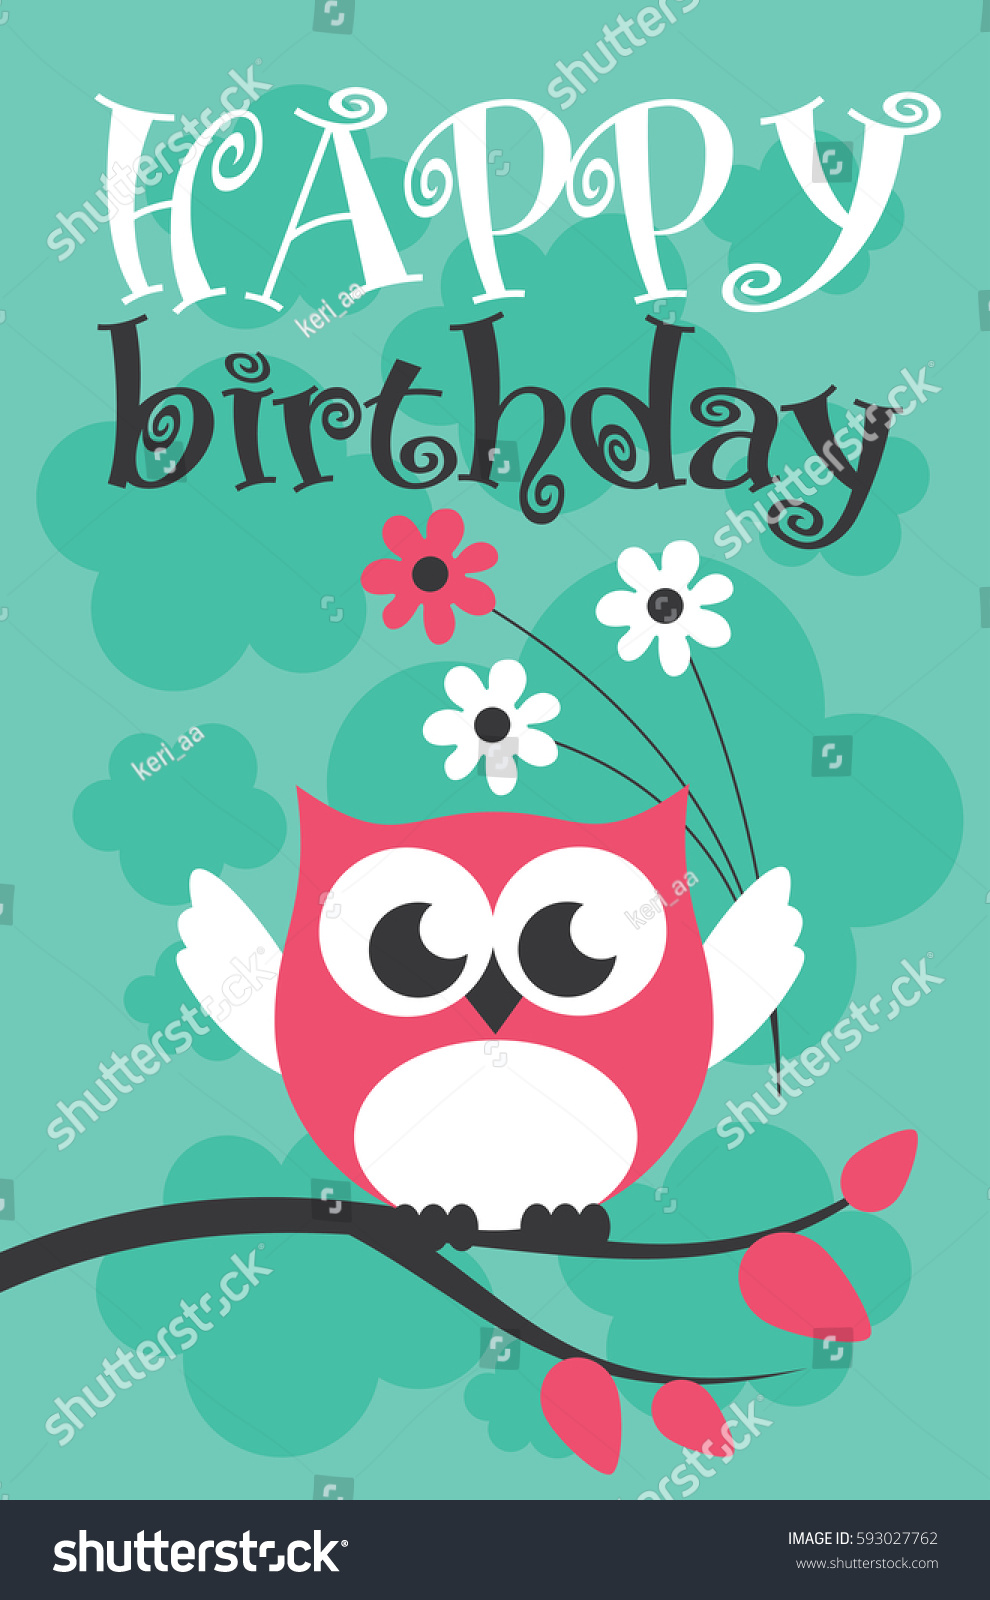 Happy Owl Birthday Card Design Vector Stock Vector (Royalty Free ...